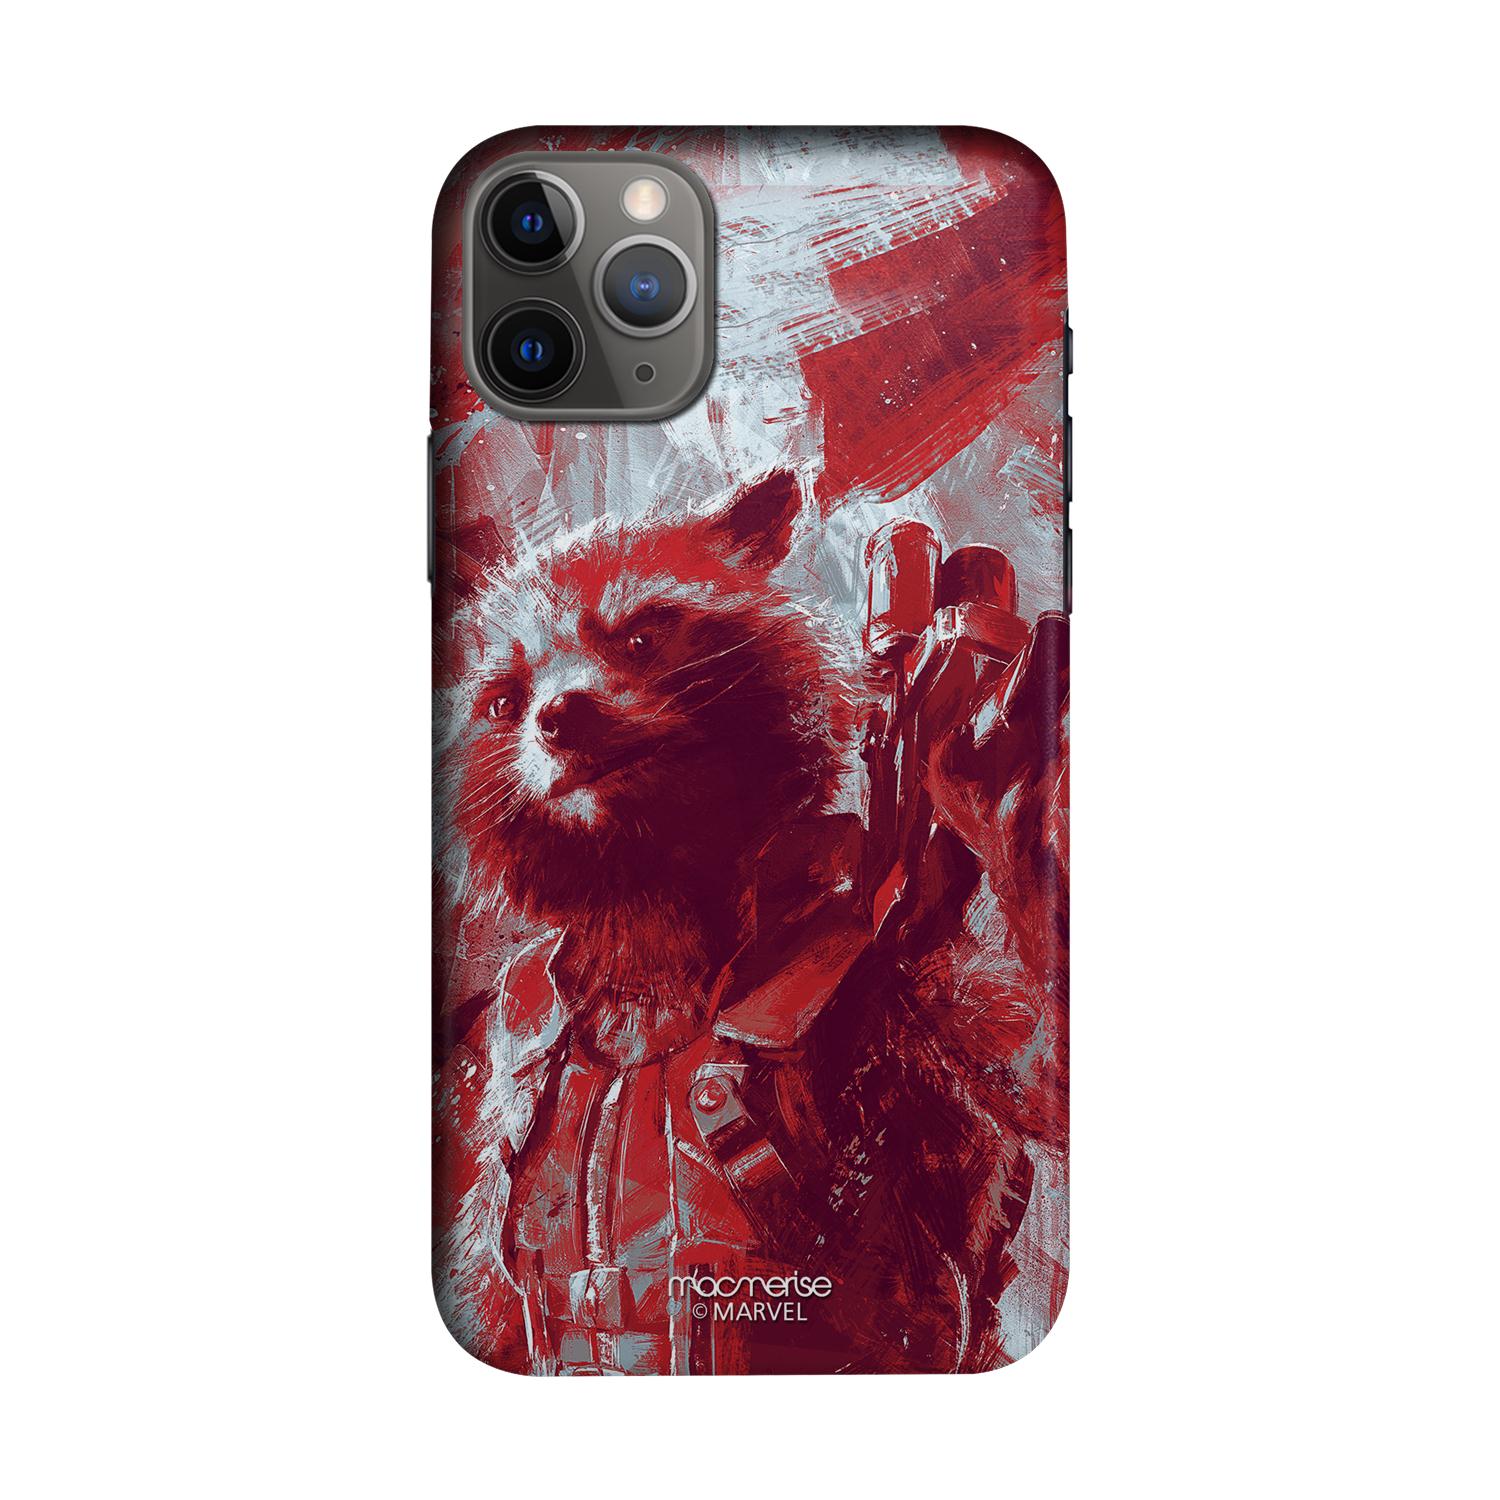 Buy Charcoal Art Rocket - Sleek Phone Case for iPhone 11 Pro Max Online